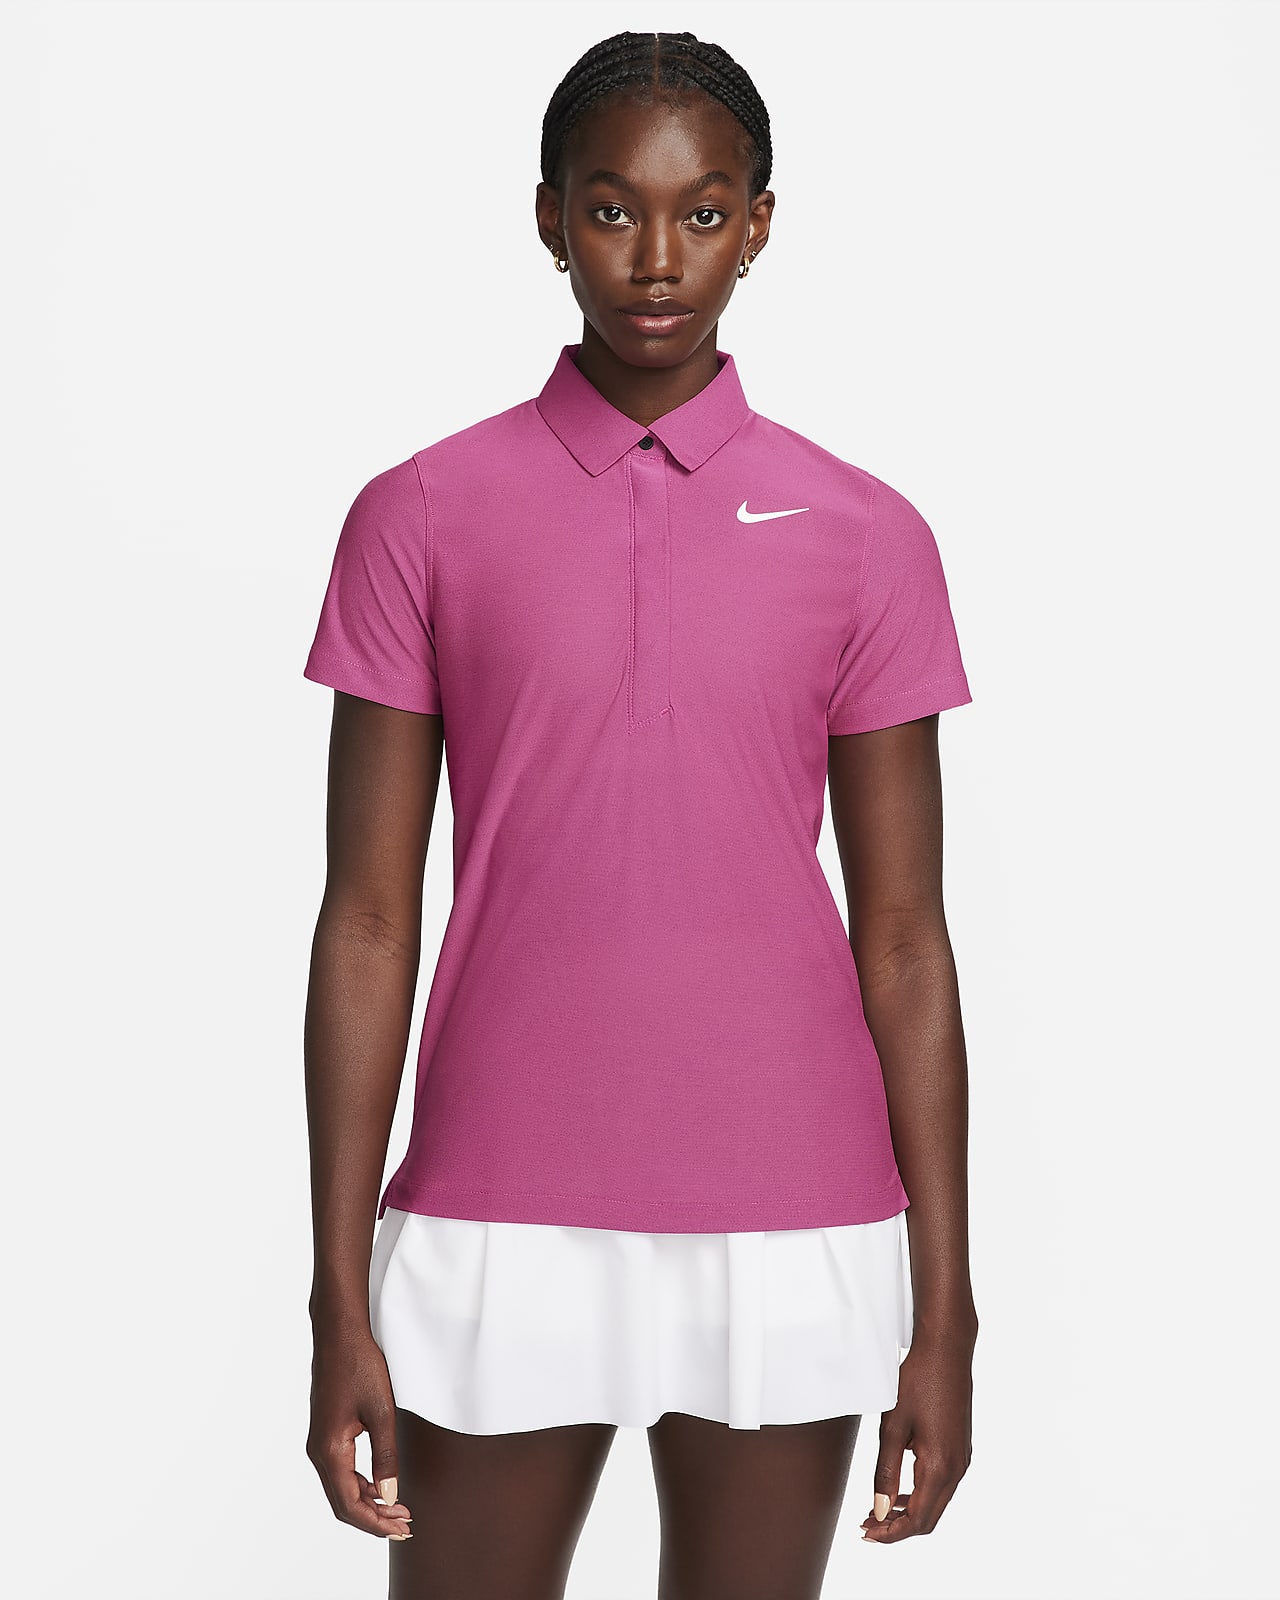 Nike Dri-FIT ADV Tour Women's Short-Sleeve Golf Polo.